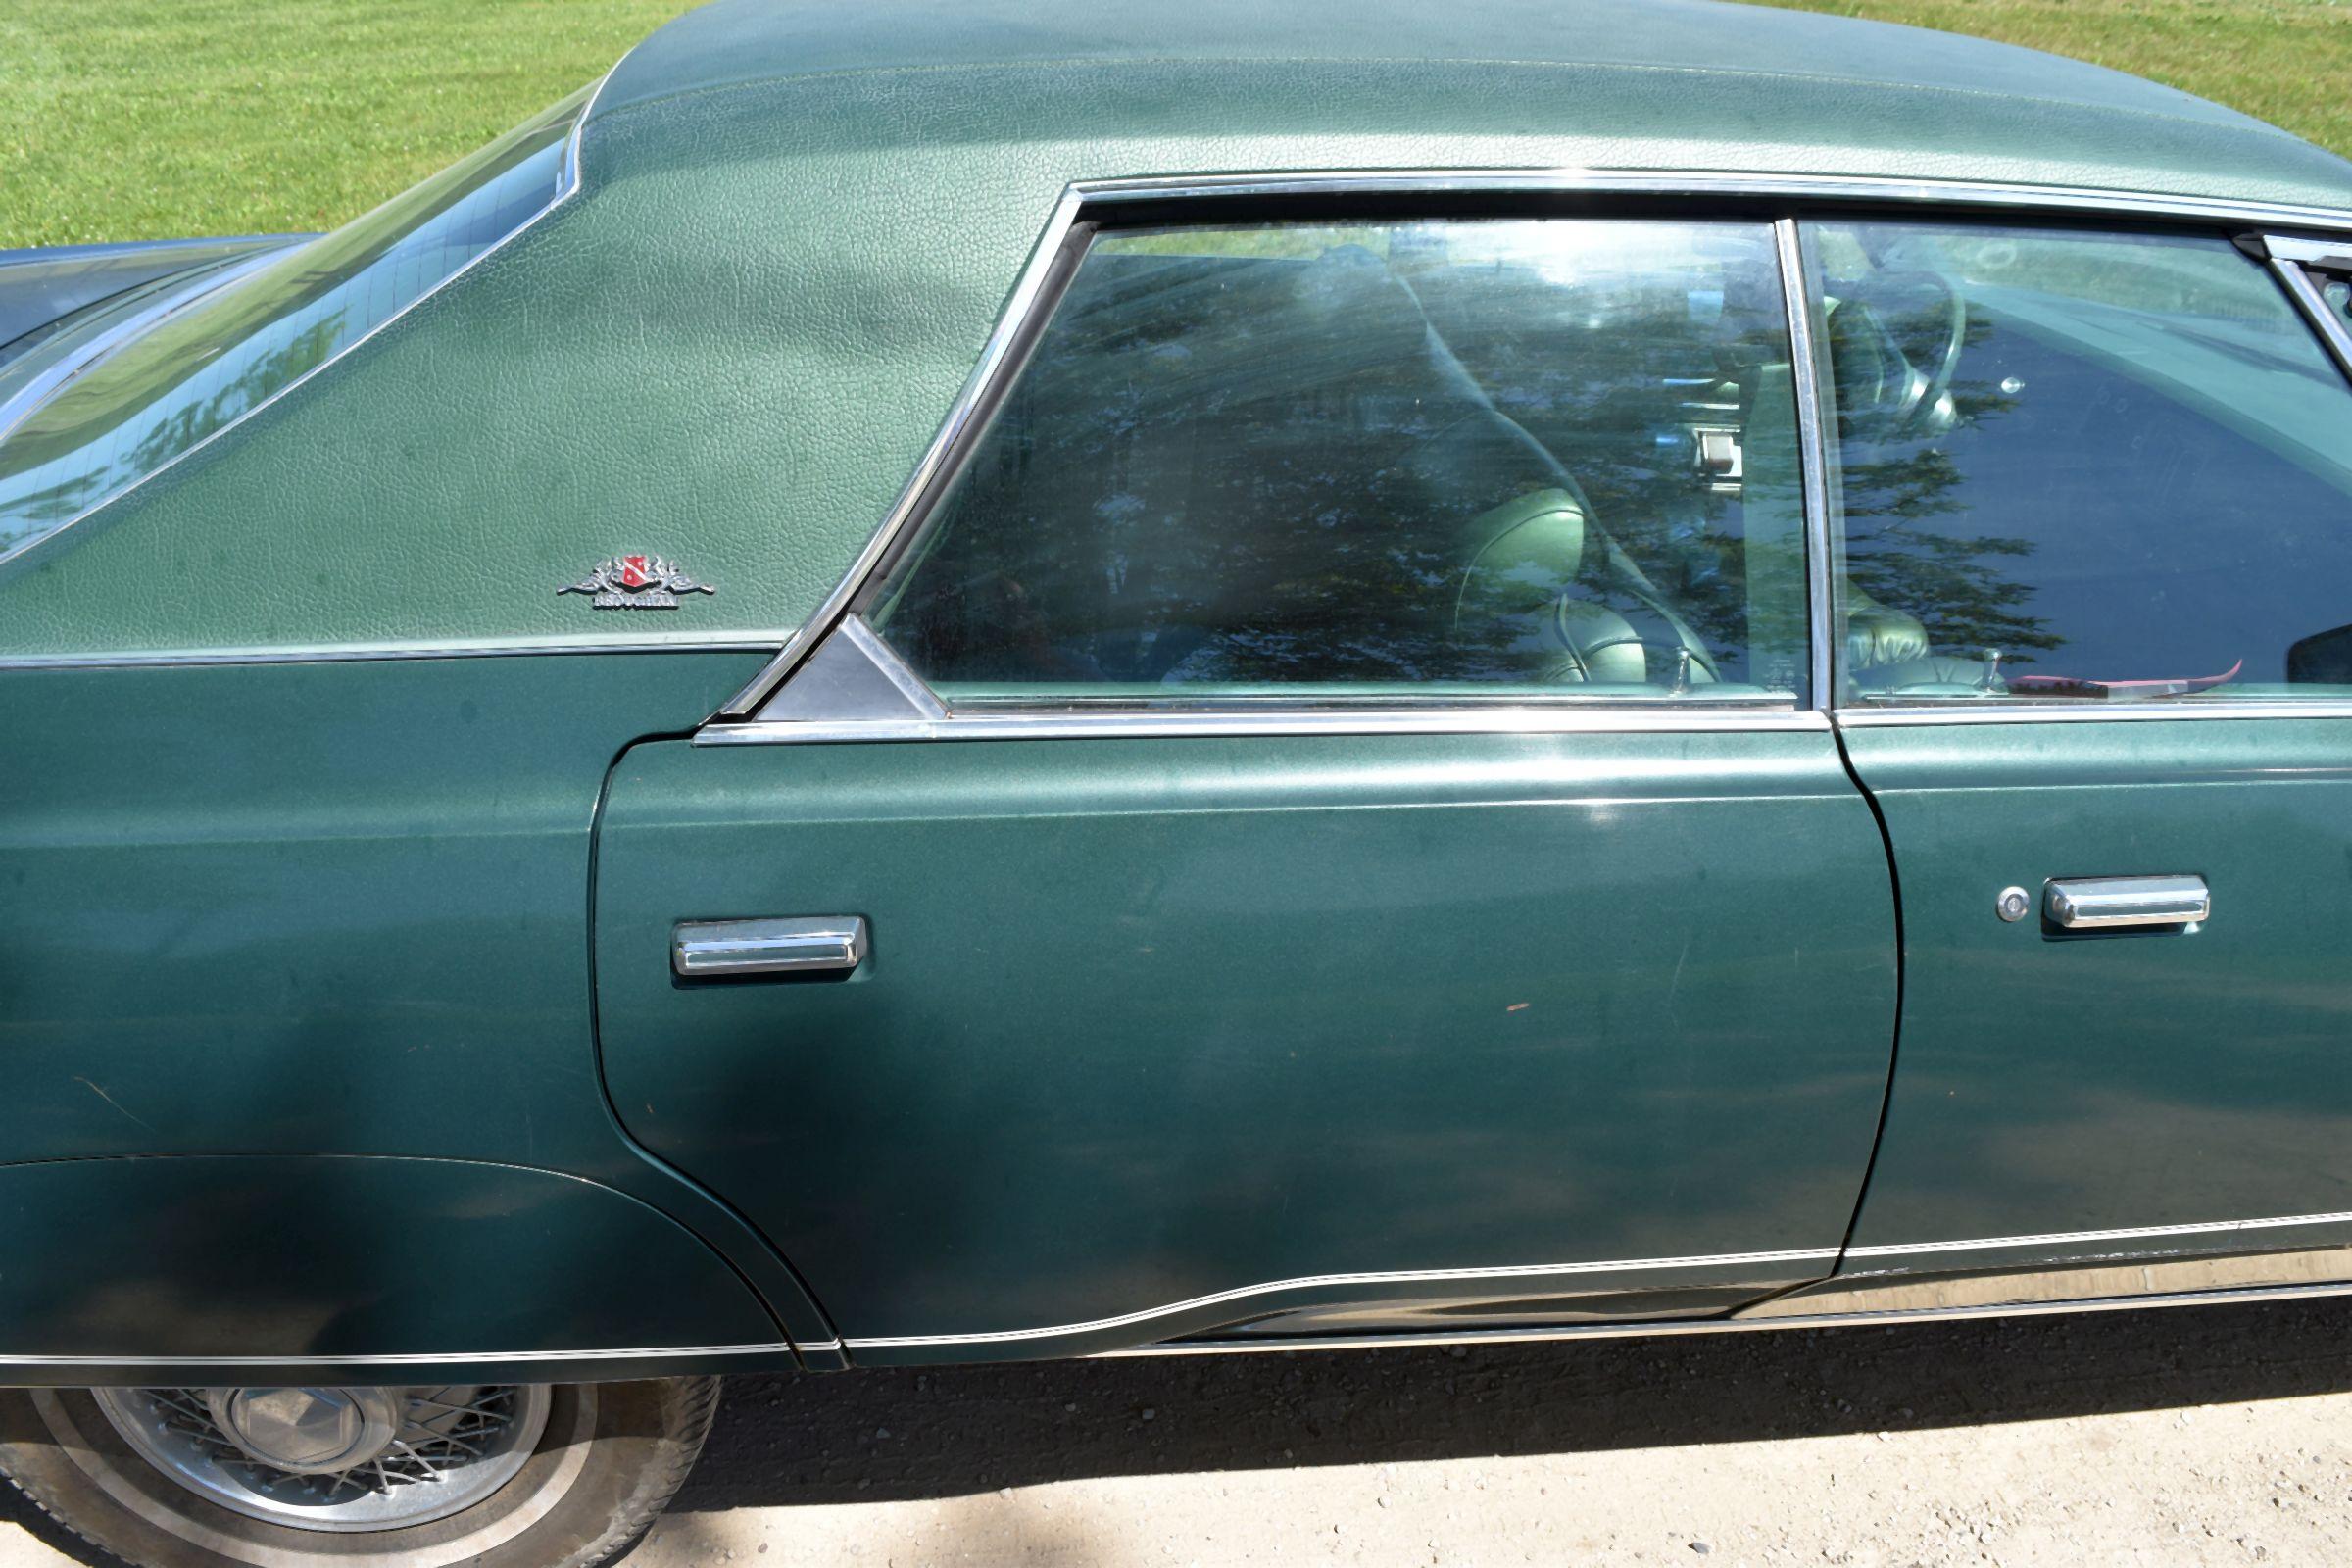 1978 Chrysler New Yorker 4 Door Car, 67,619 Original Miles, Green Leather Interior, 400ci Engine, Au